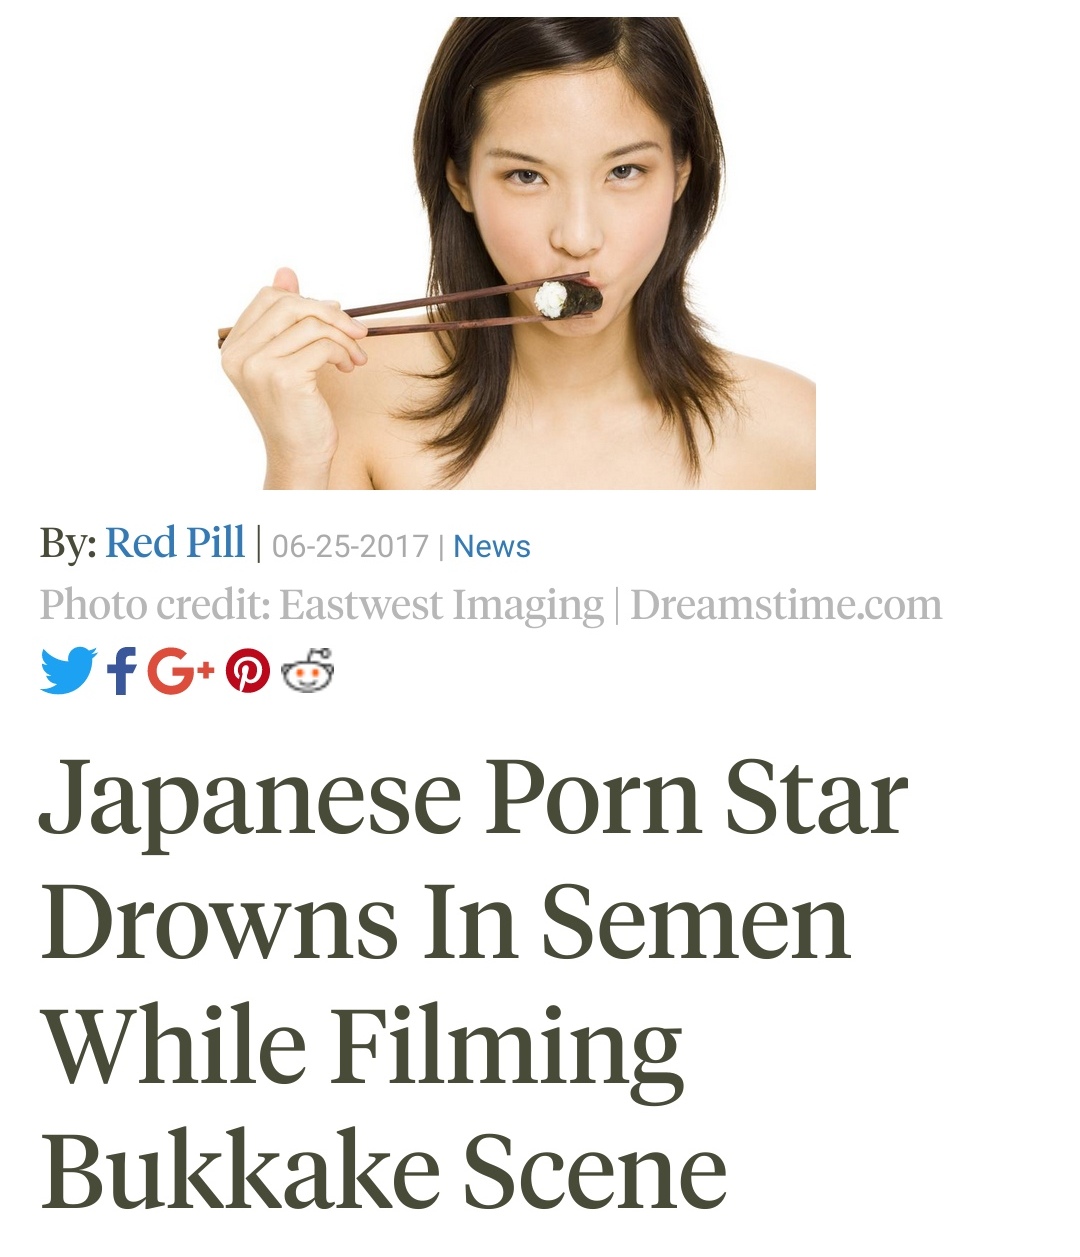 Japanese Porn Star Drowns In Semen.